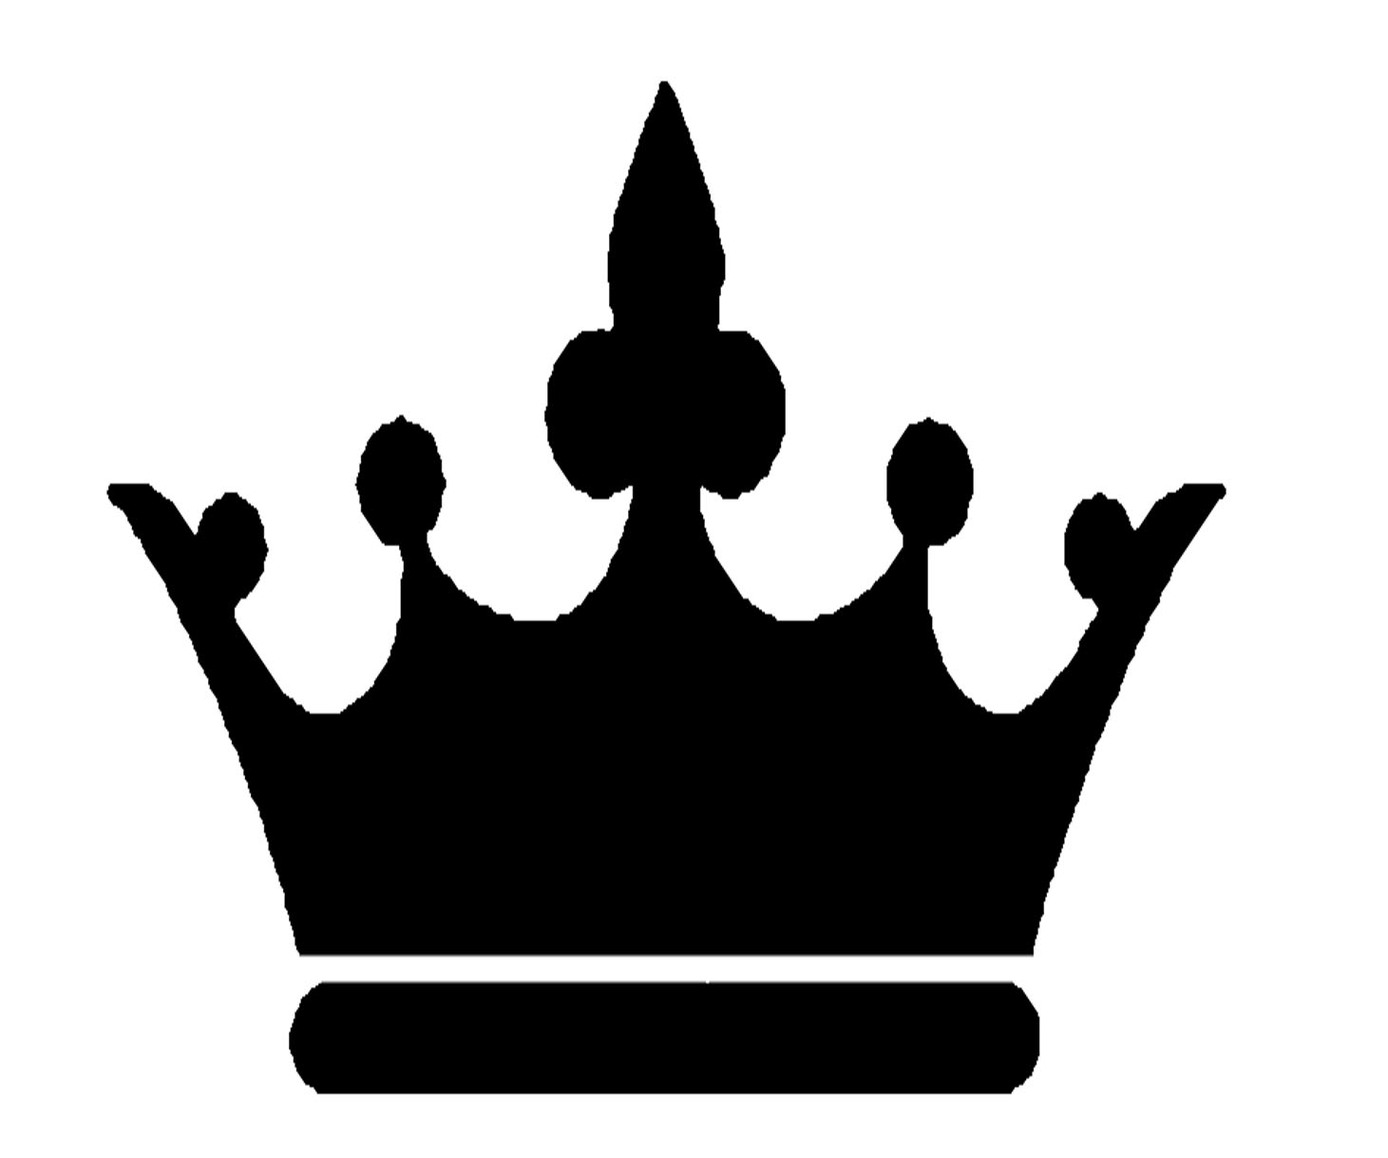 Crown clipart vector